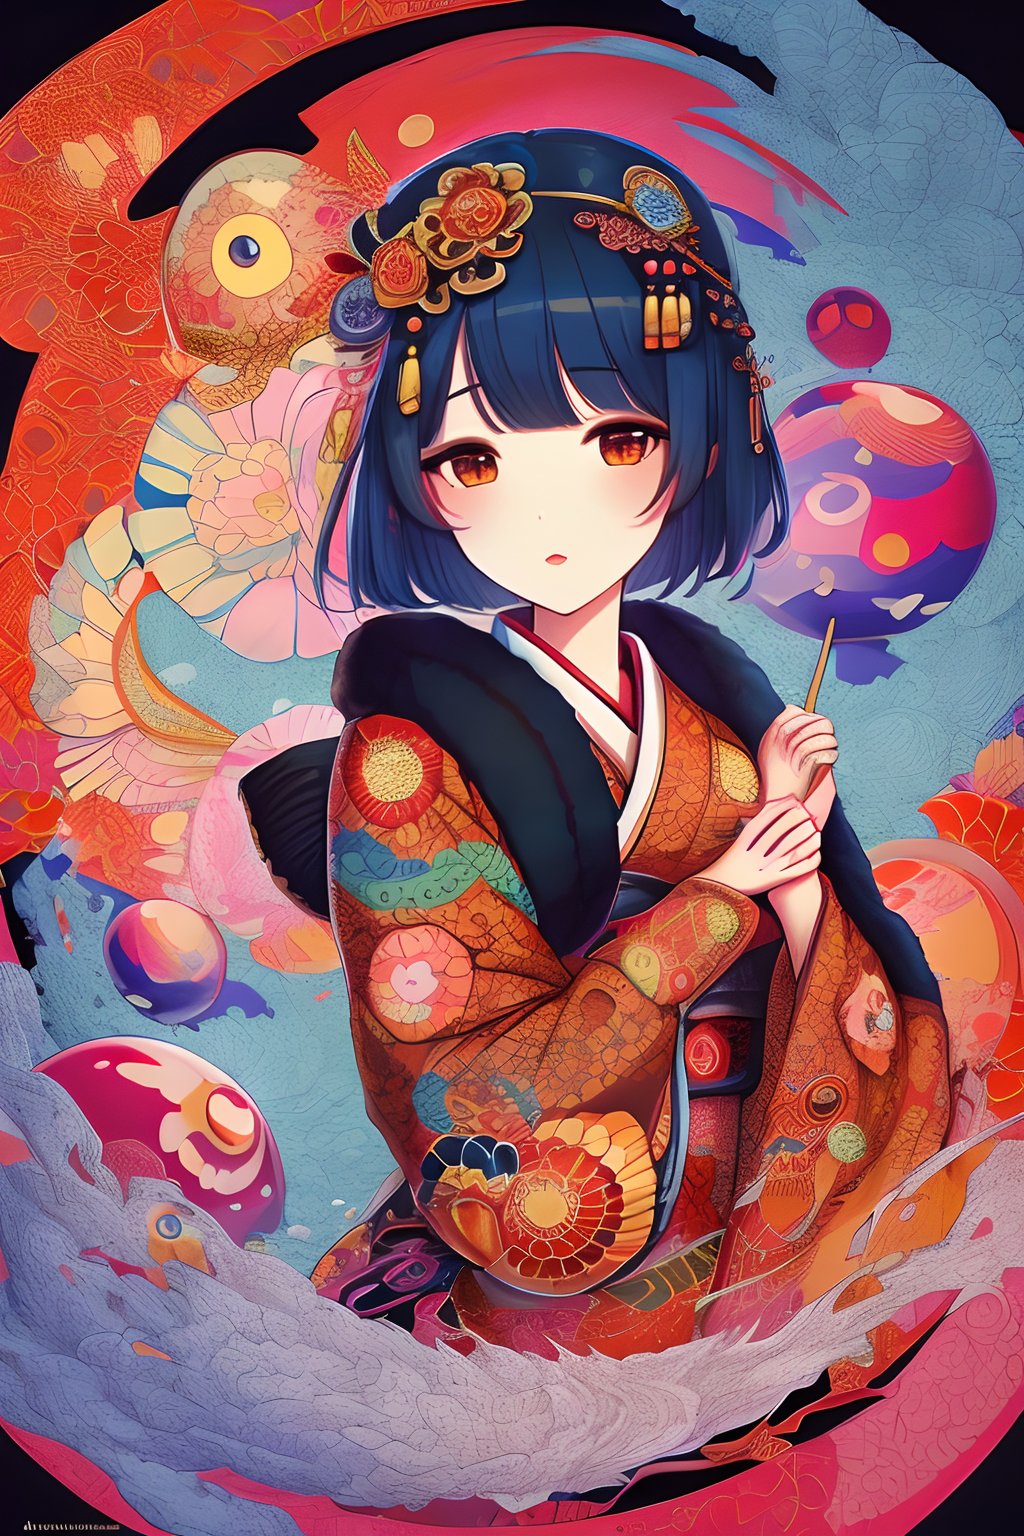 a geisha girl, intricate ornamentation, detailed illustration, Unity render, blending the styles of William Morris and Takashi Murakami